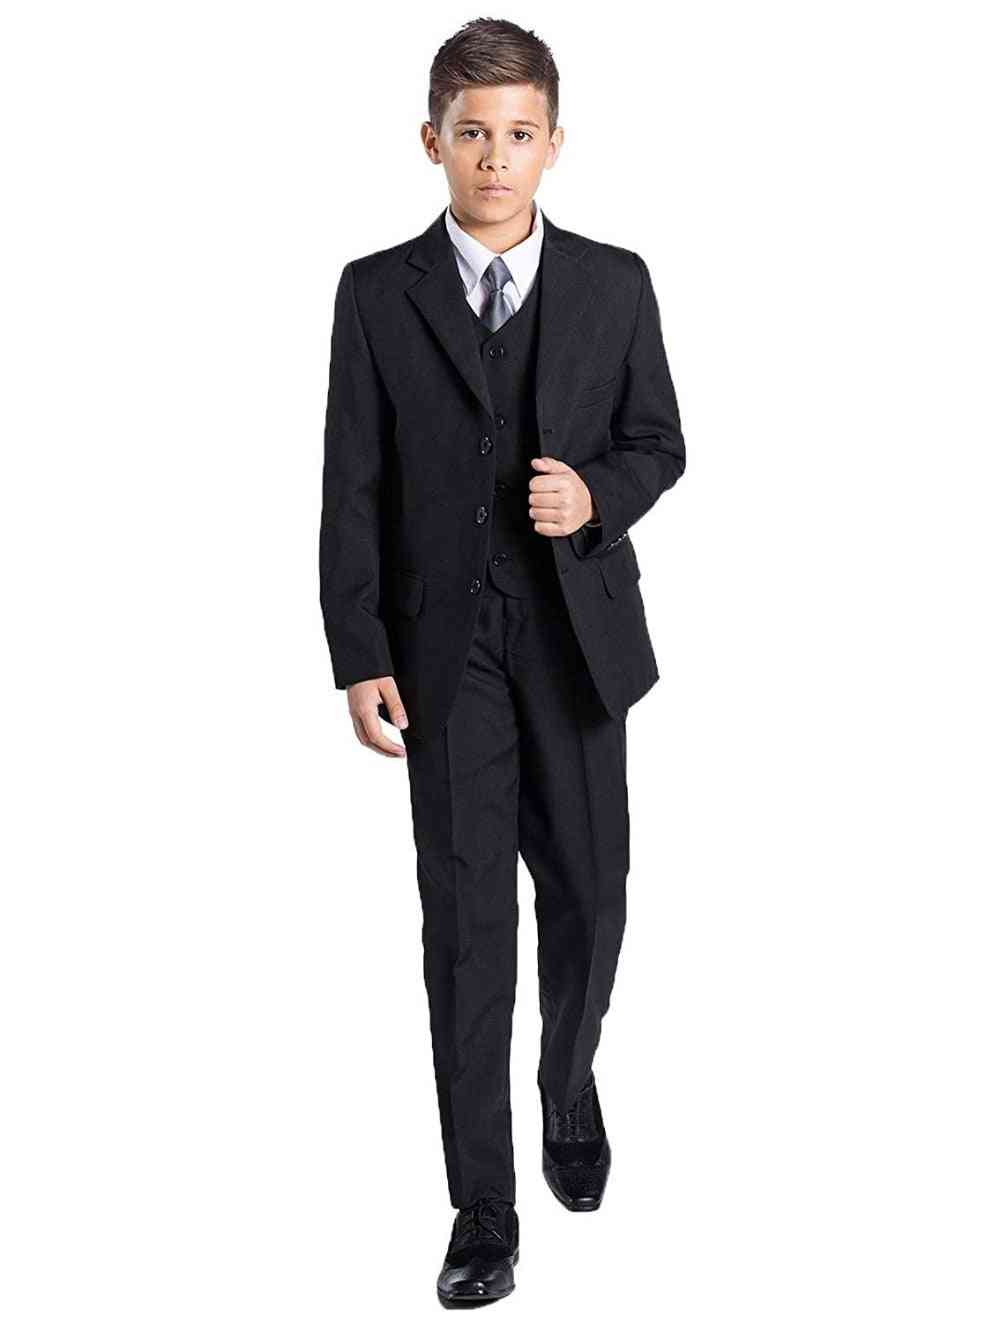 Tuxedo Fist Communication Party Wear Suit For Boy's